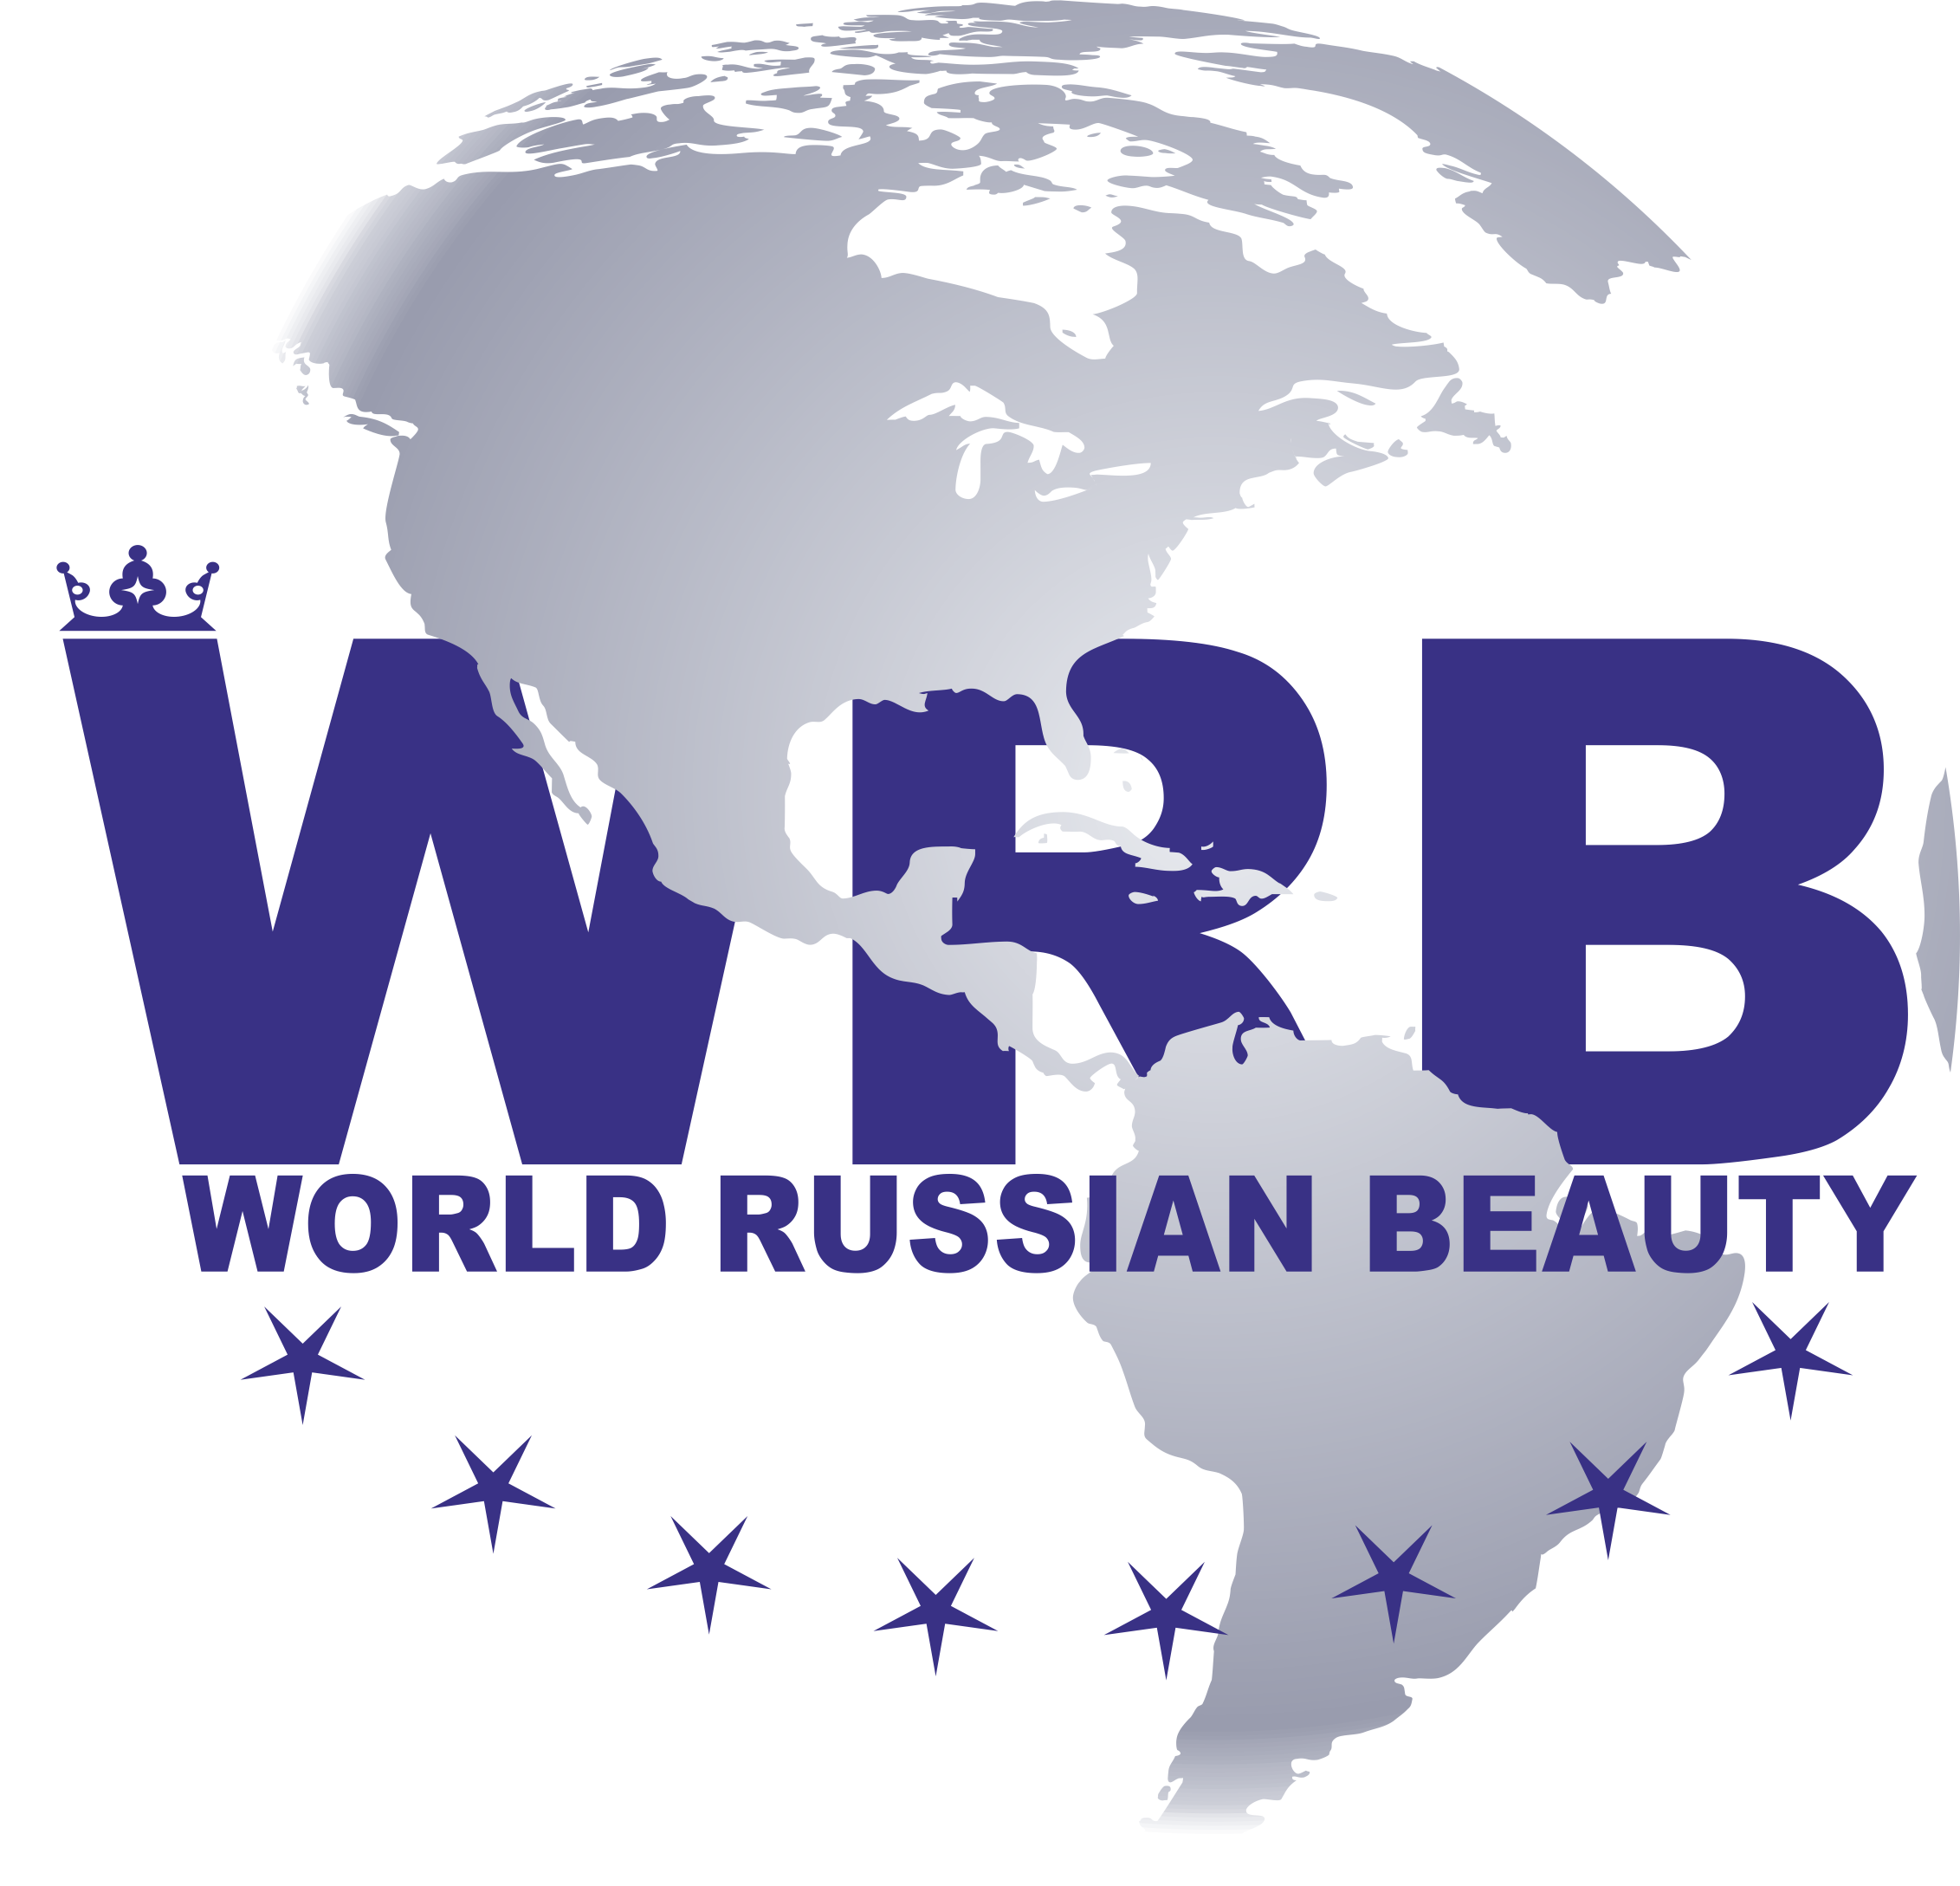 World Russian Beauty. Бьюти ворлд. Beauty World эмблема. WRB конкурс красоты.